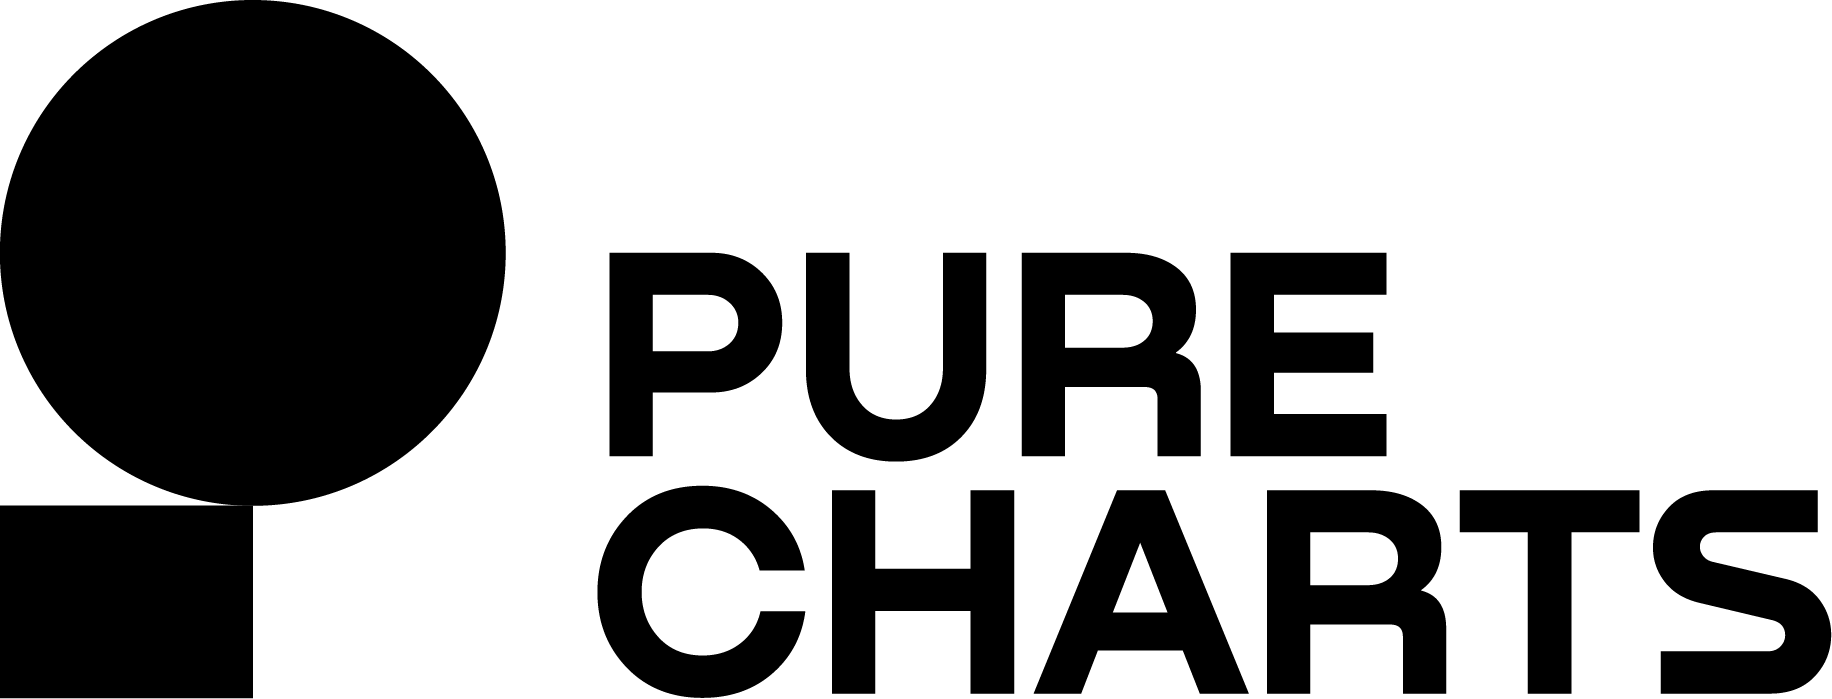 Purechart logo